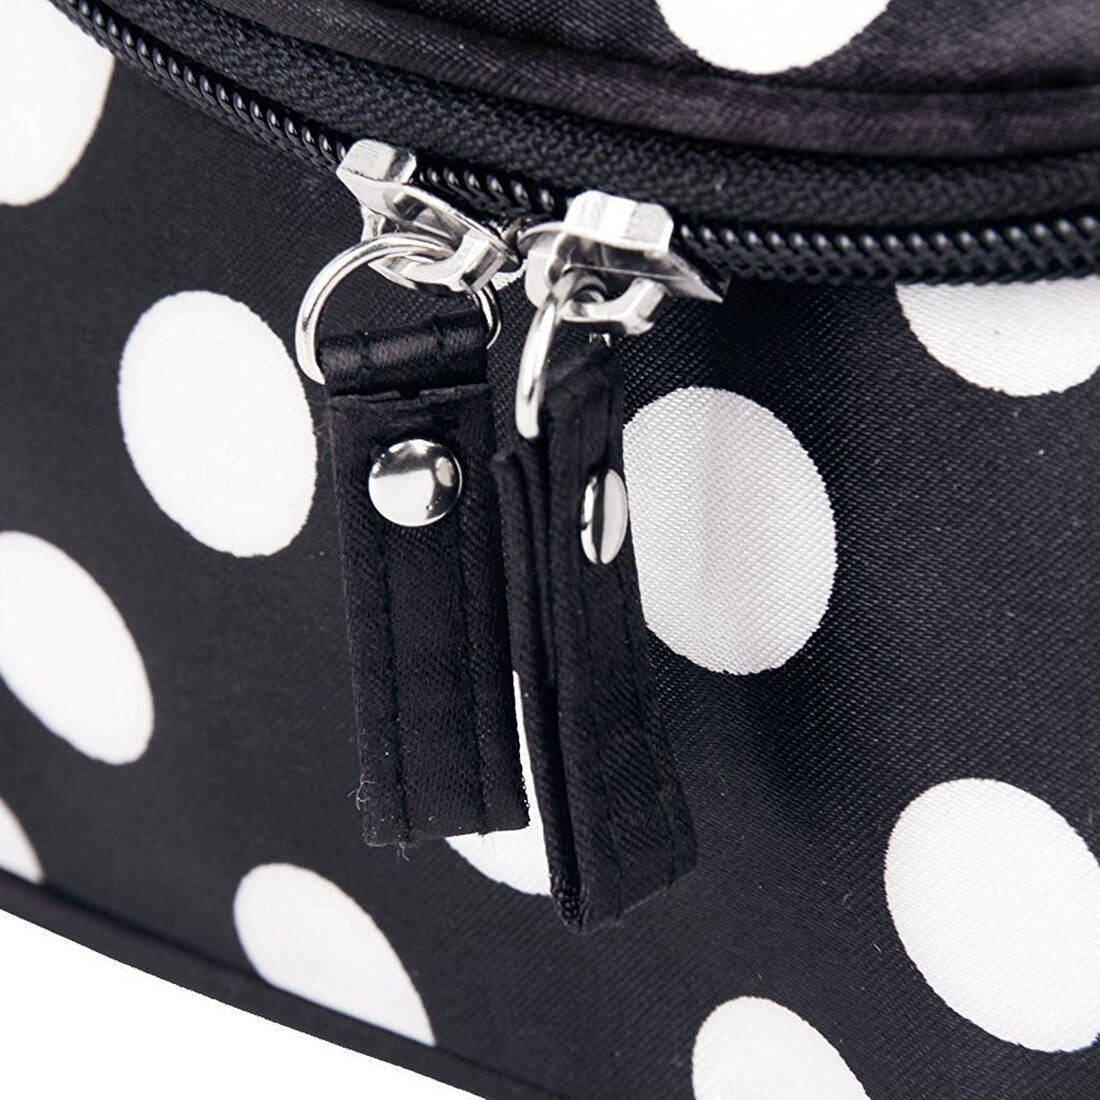 Black Zipper Cosmetic Bag Toiletry Bag Make-up Bag Hand Case Bag with Dot Patterns - ebowsos